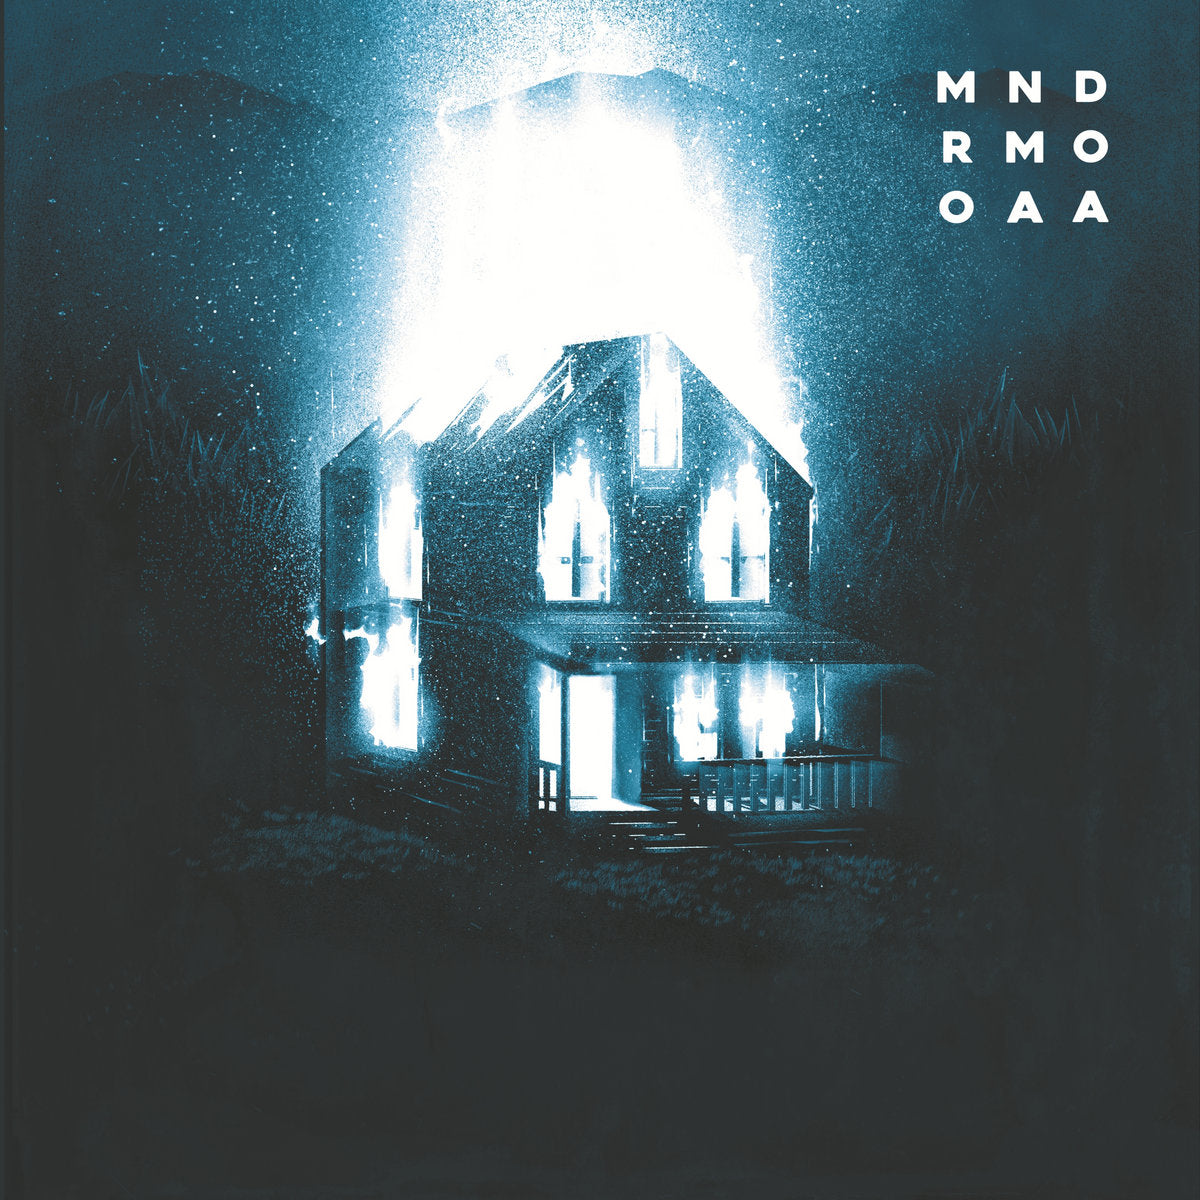 MONODRAMA - Mndrmooaa - 2LP - Clear Vinyl